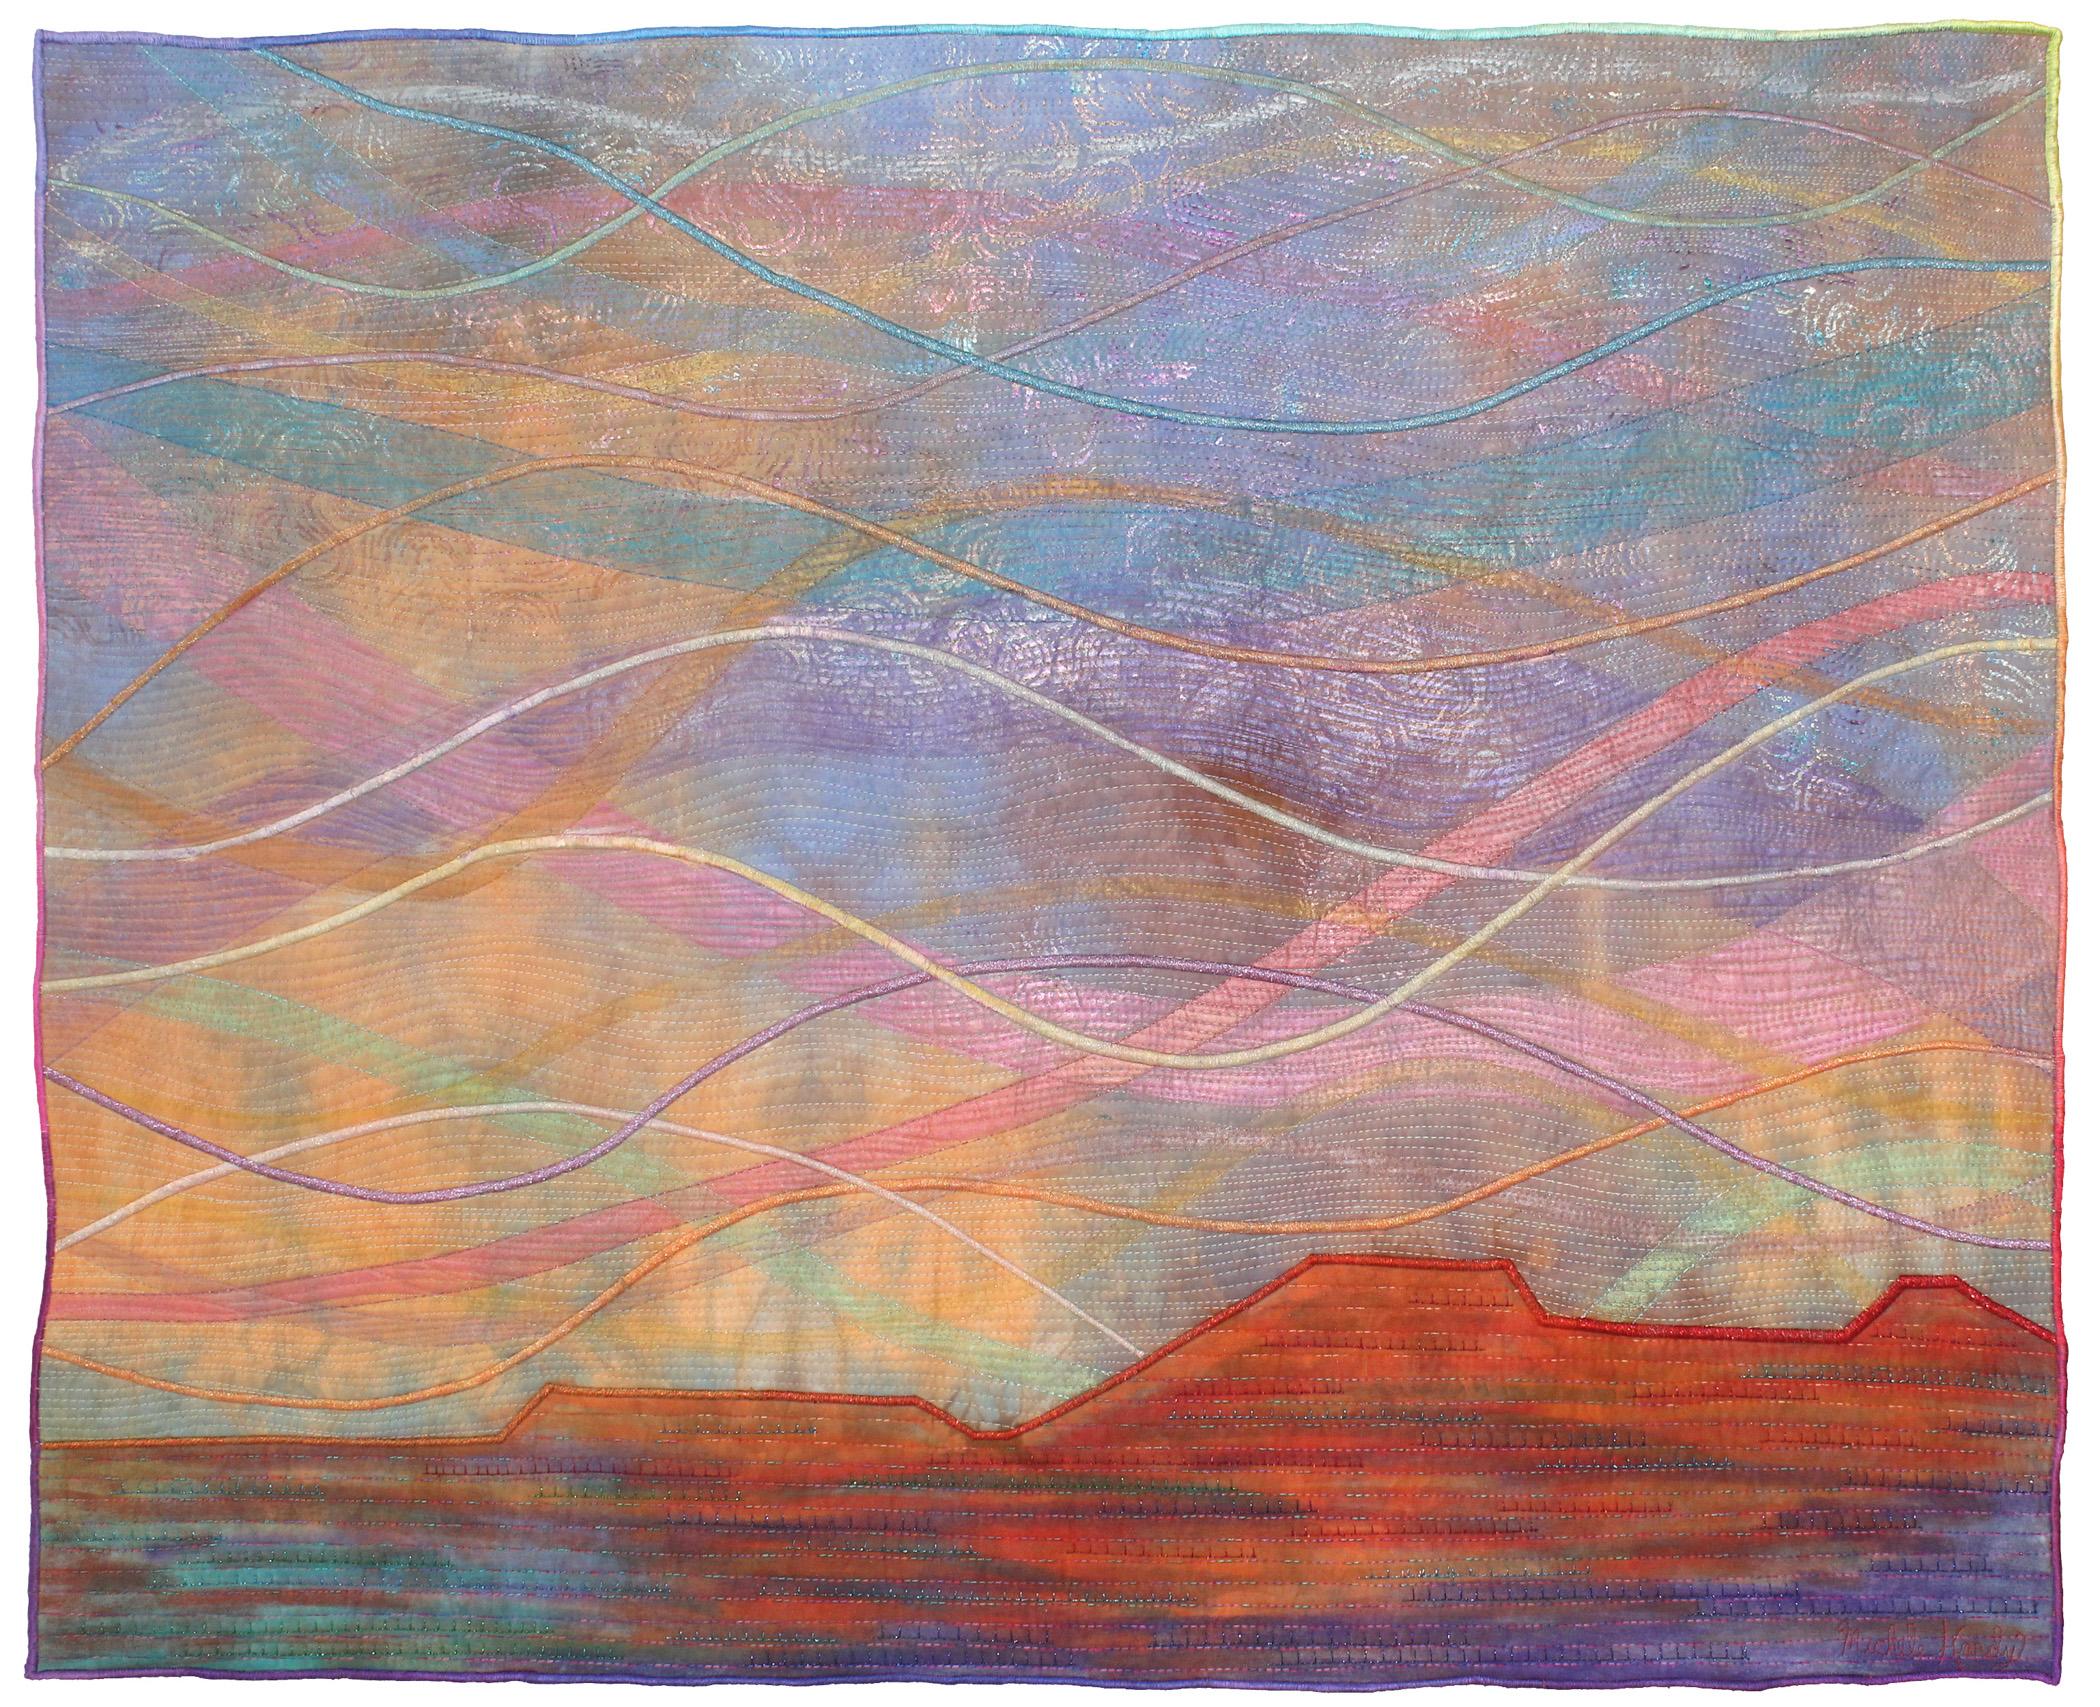 Michele Hardy - Elements #16: Desert Winds